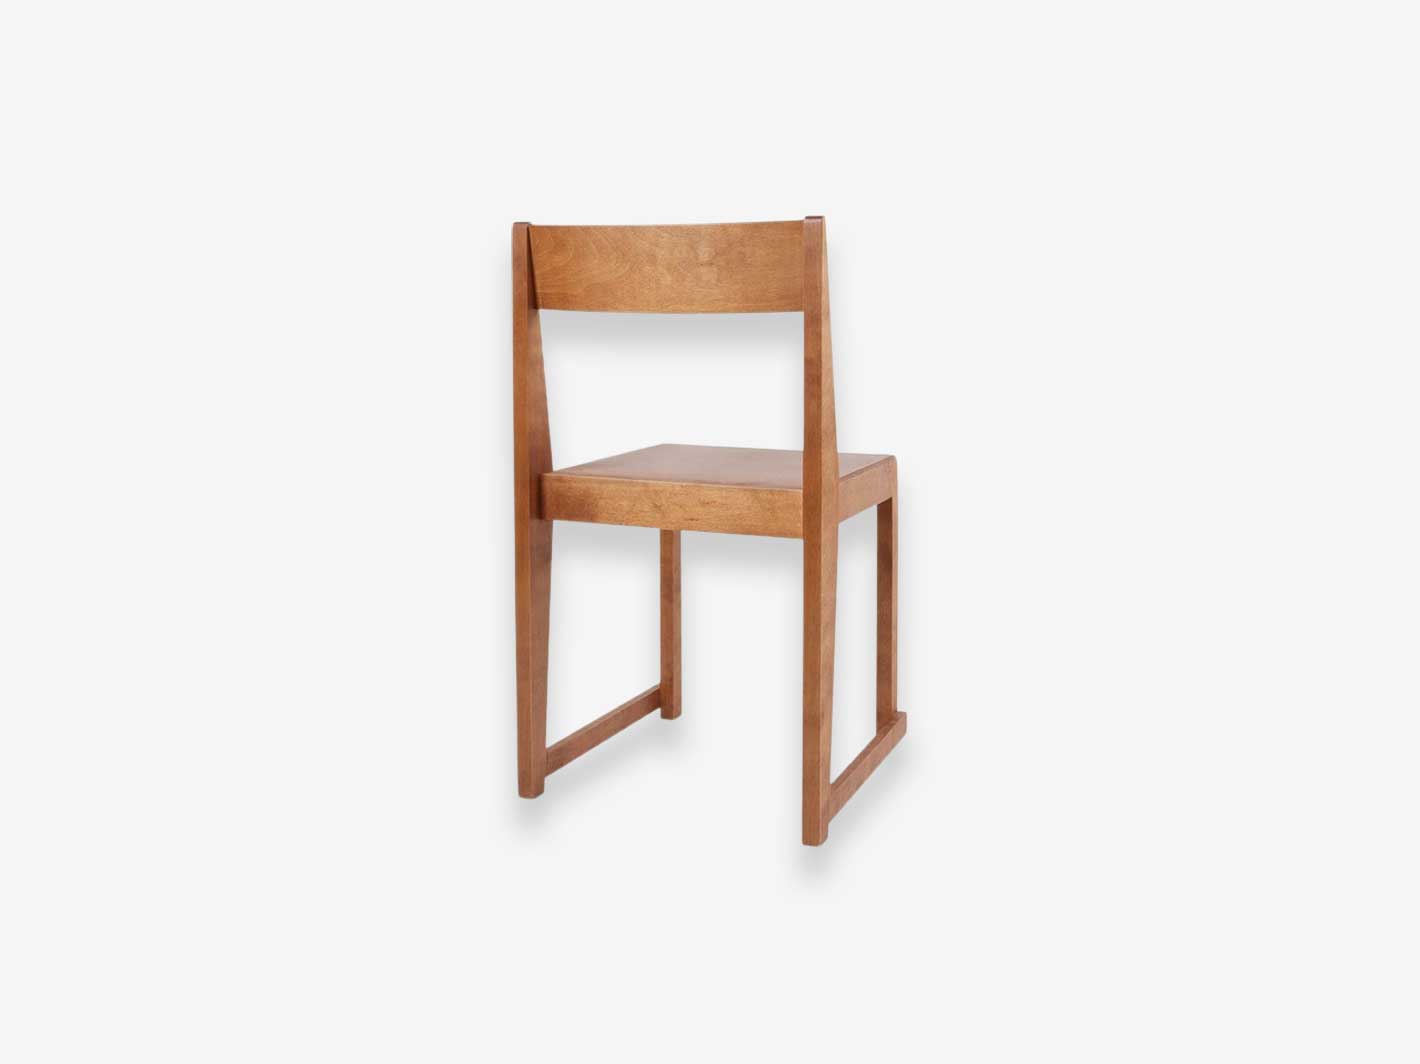 Chair 01 Warm Brown Wood